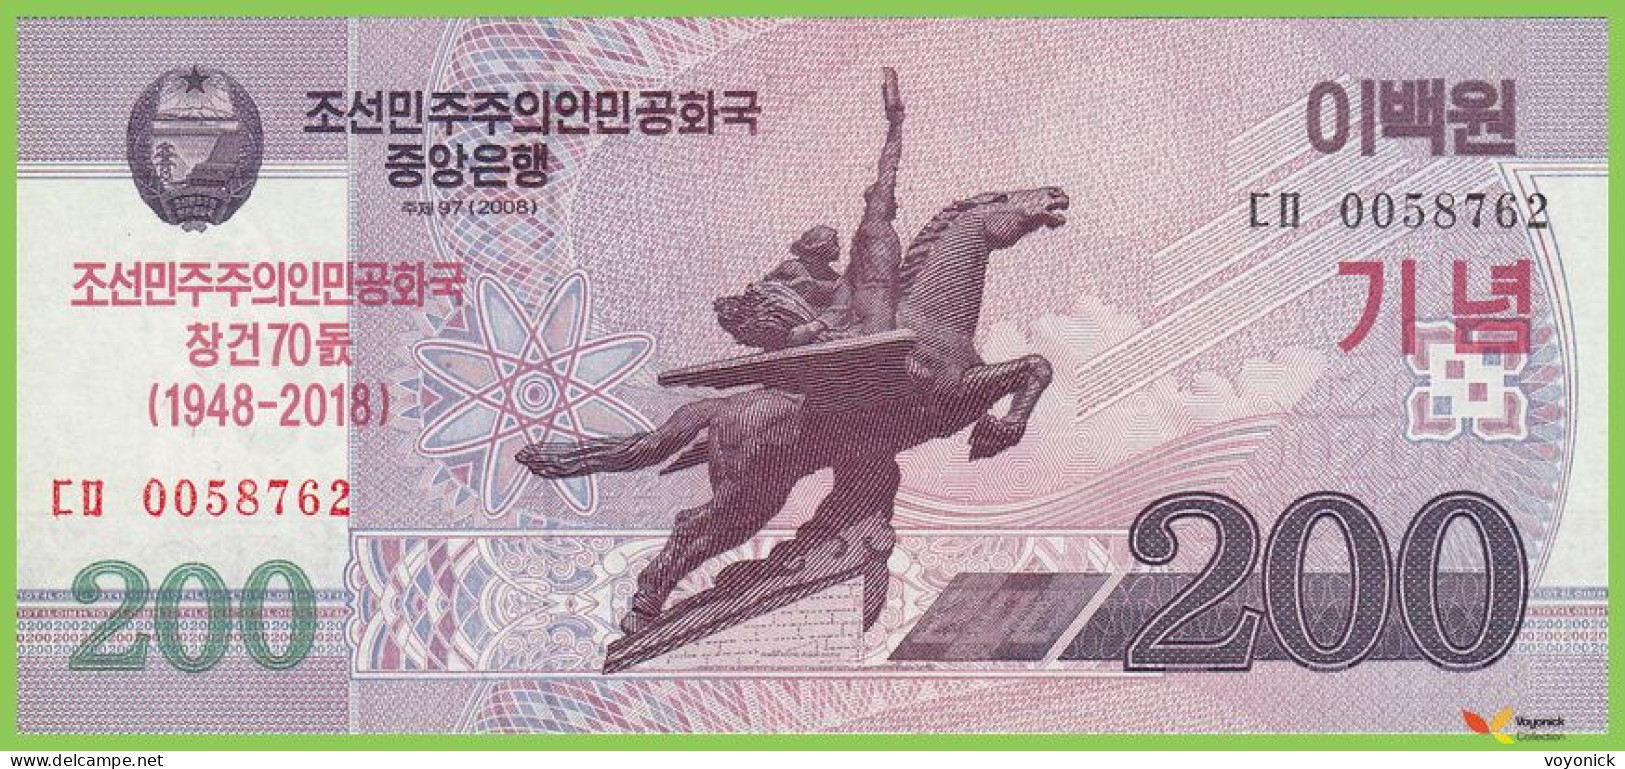 Voyo KOREA NORTH 200 Won 2018 PCSWB21 B360.2 ㄷㅁ UNC Commemorative - Korea (Nord-)